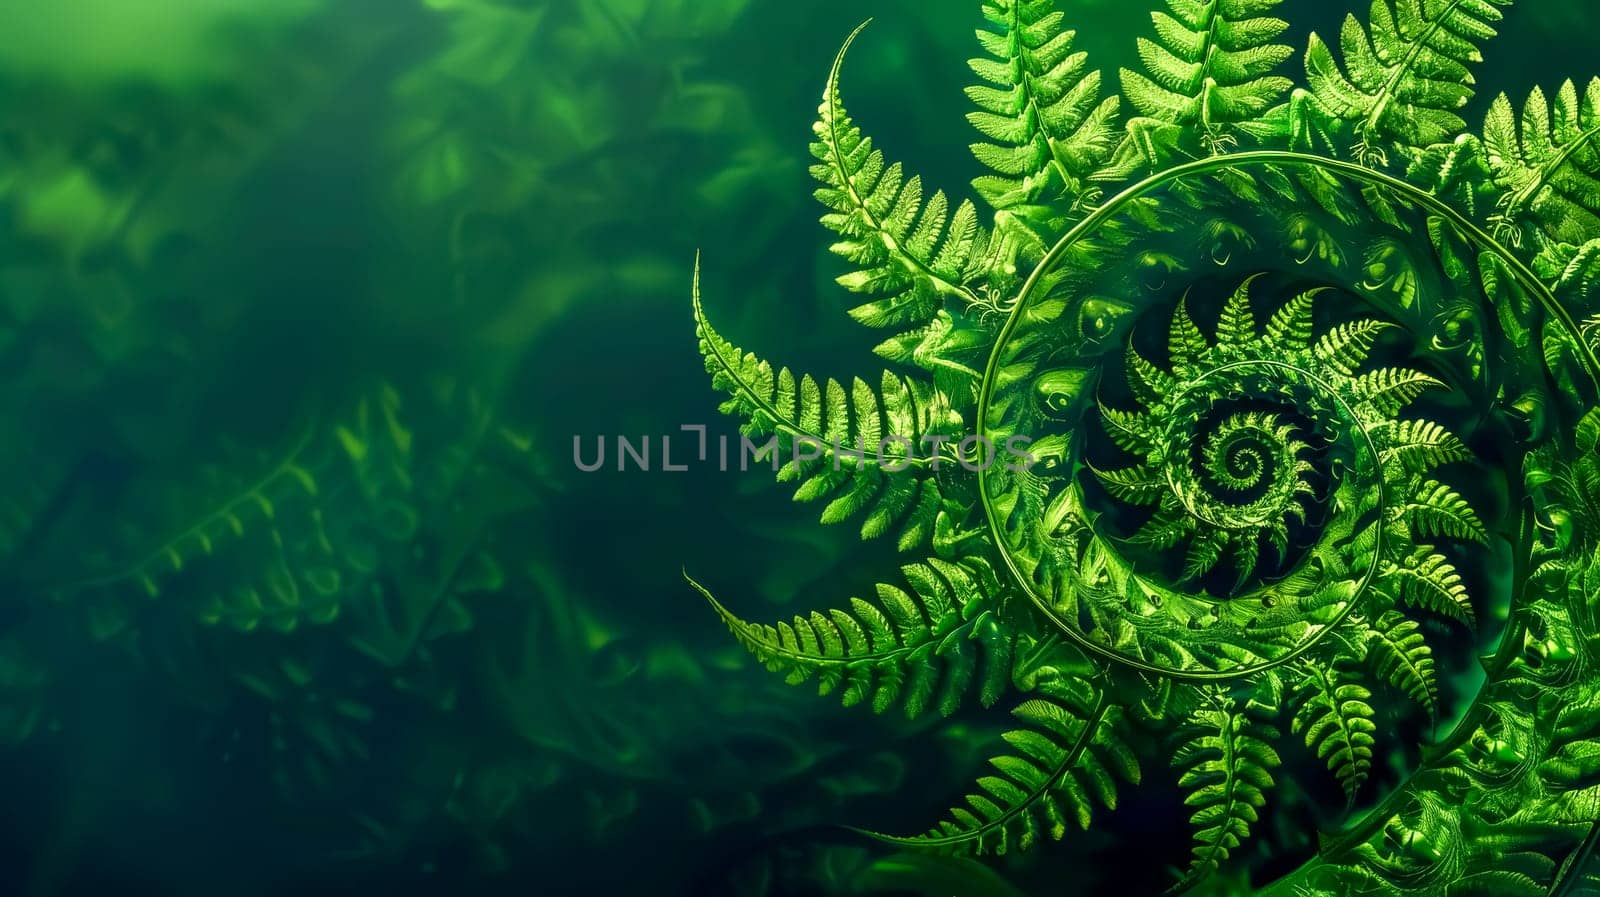 Fern fractal: nature's geometry in green by Edophoto